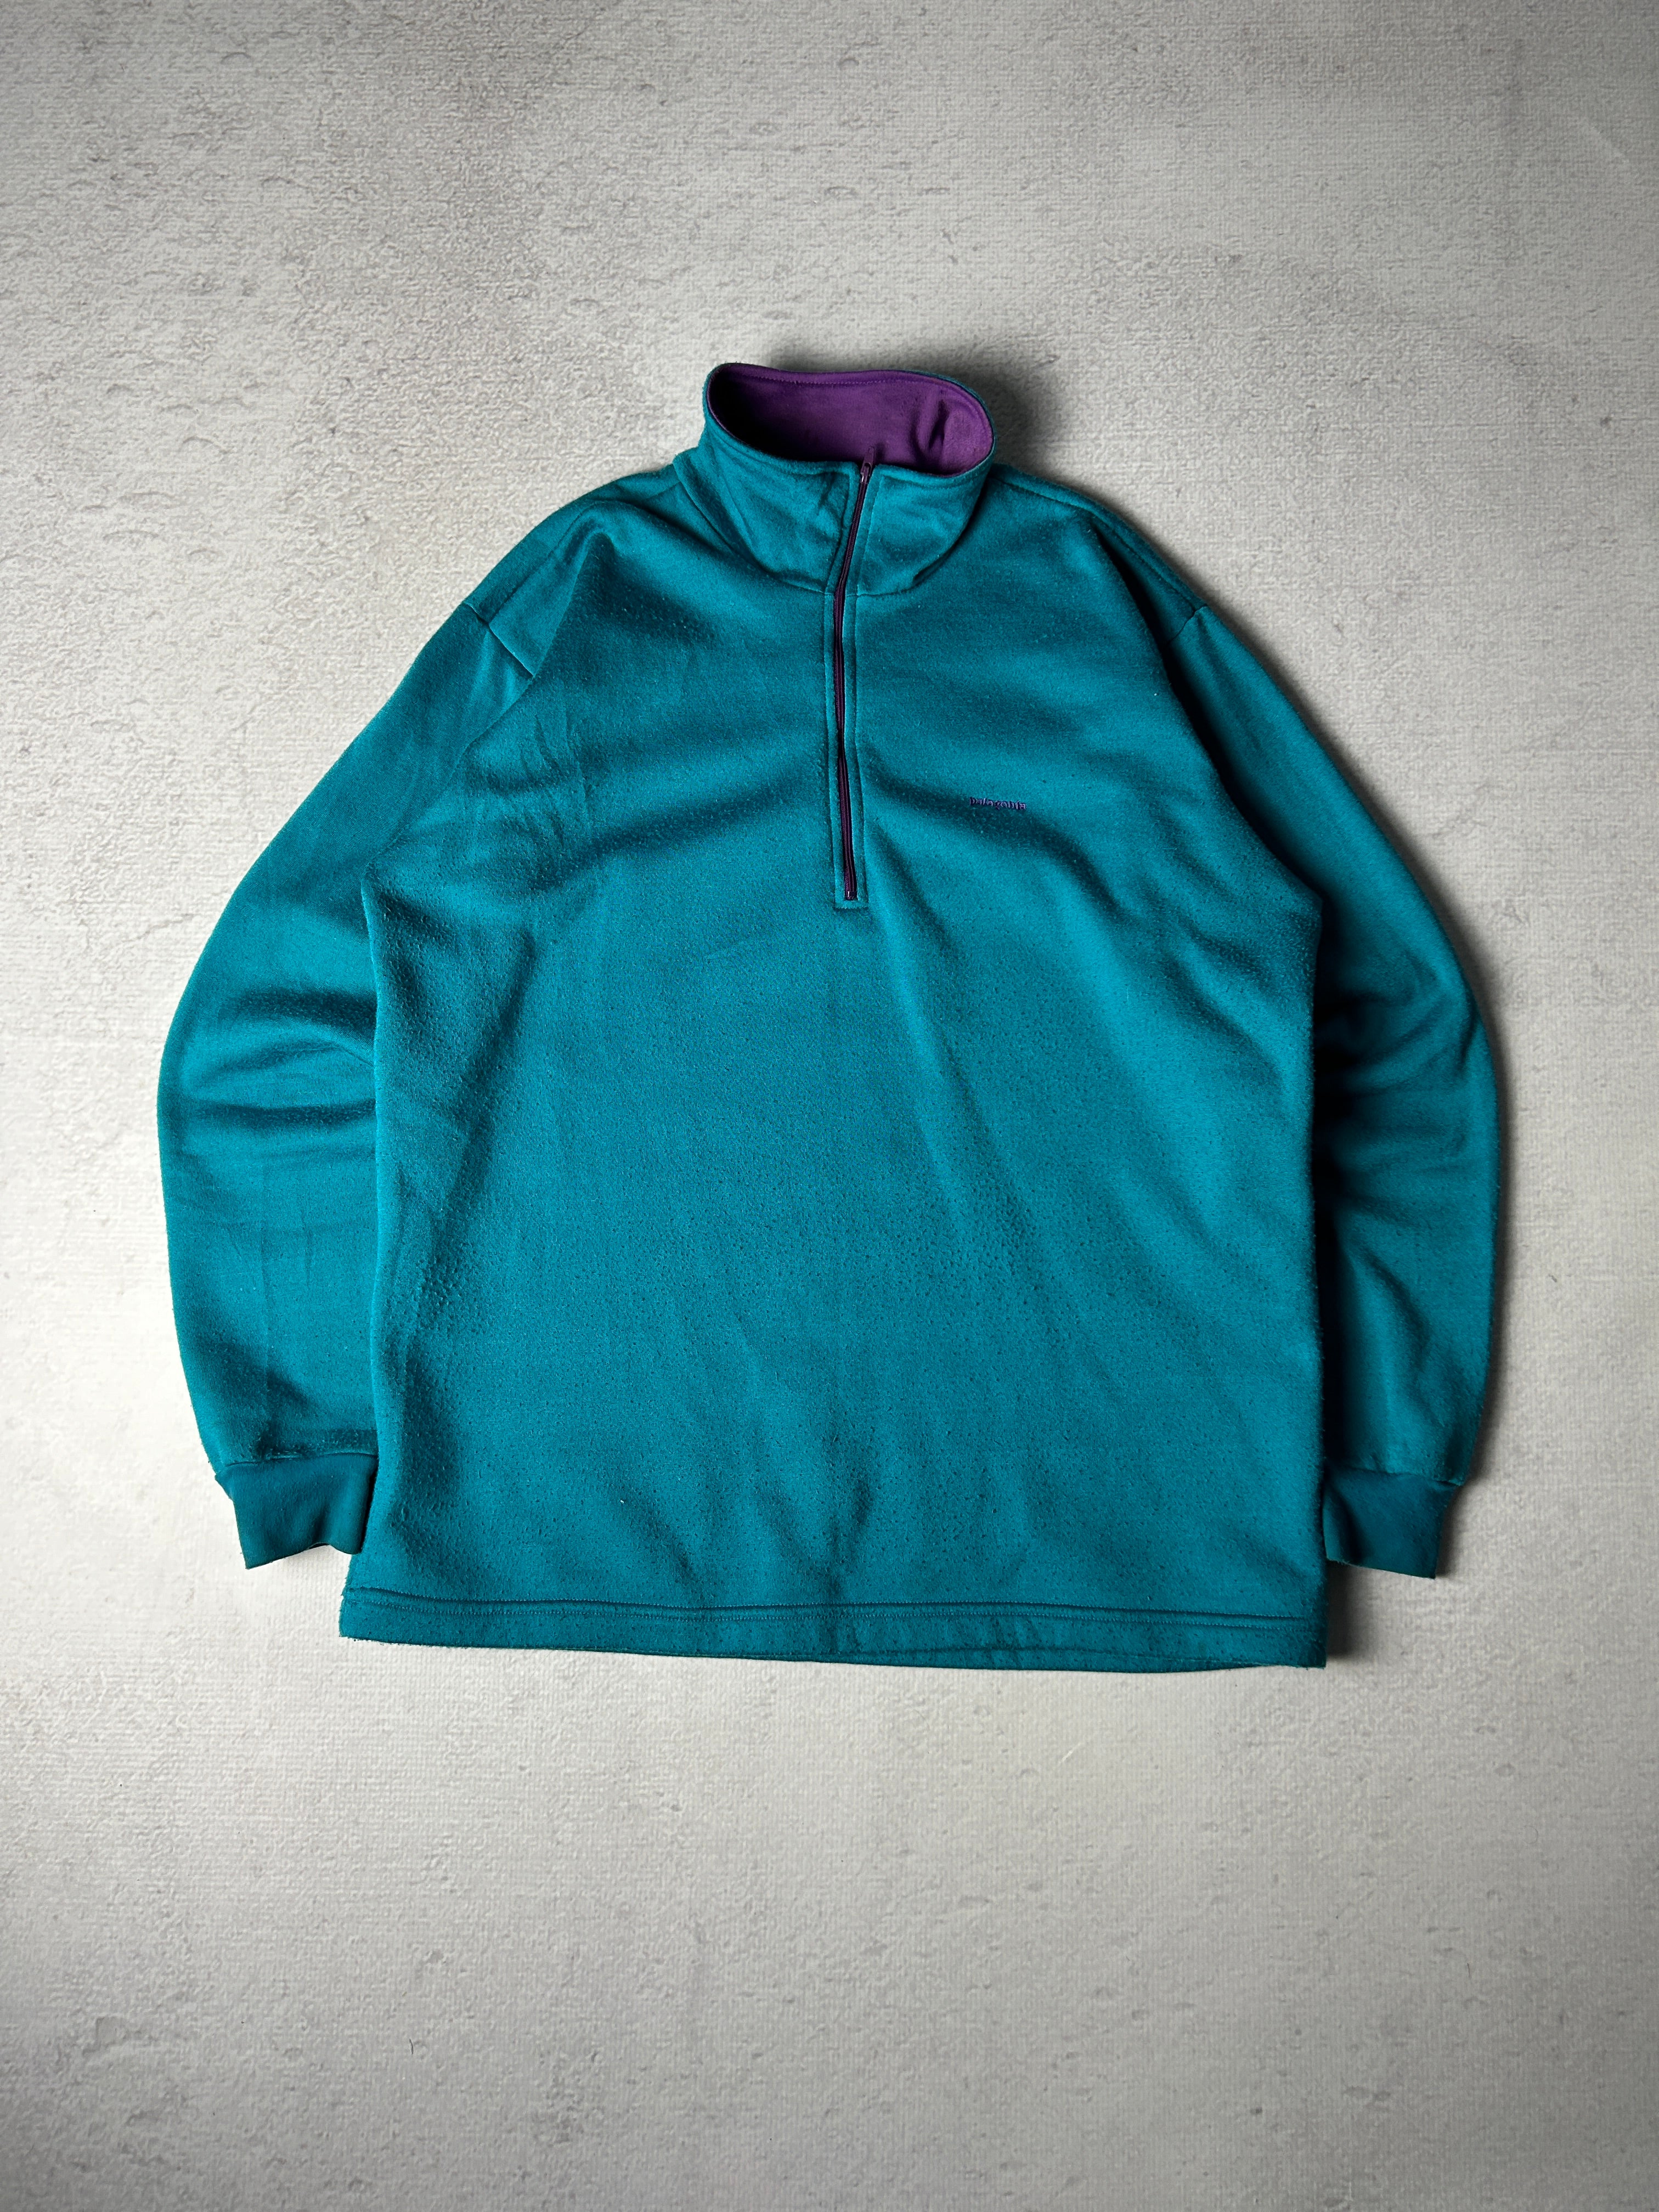 Vintage Patagonia 1/4 Zip Sweatshirt - Women's Large